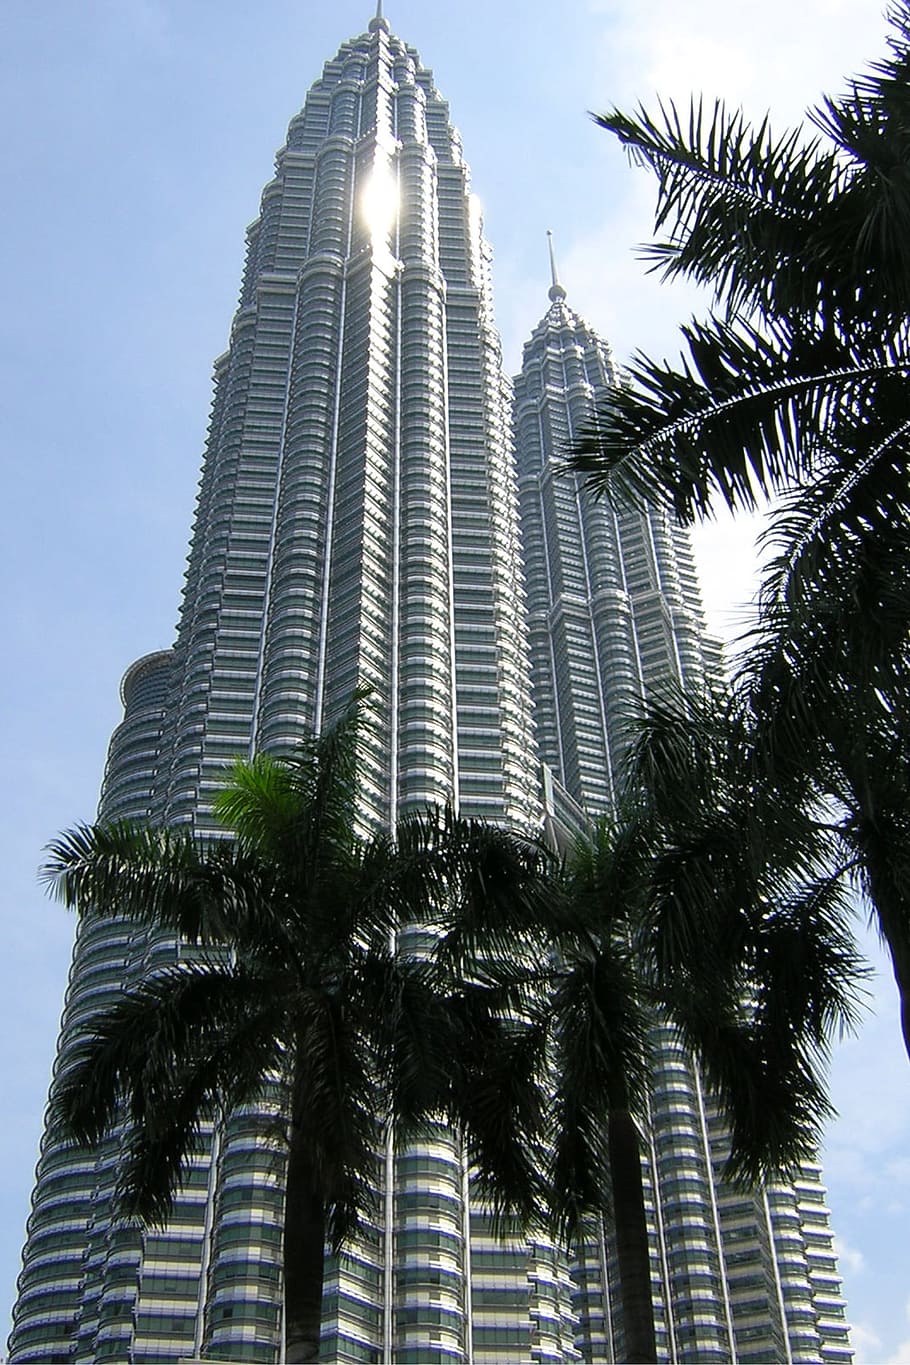 petronas towers, petronas twin towers, menara petronas, menara berkembar petronas, malaysia, skyscraper, building, asia, kuala lumpur, city